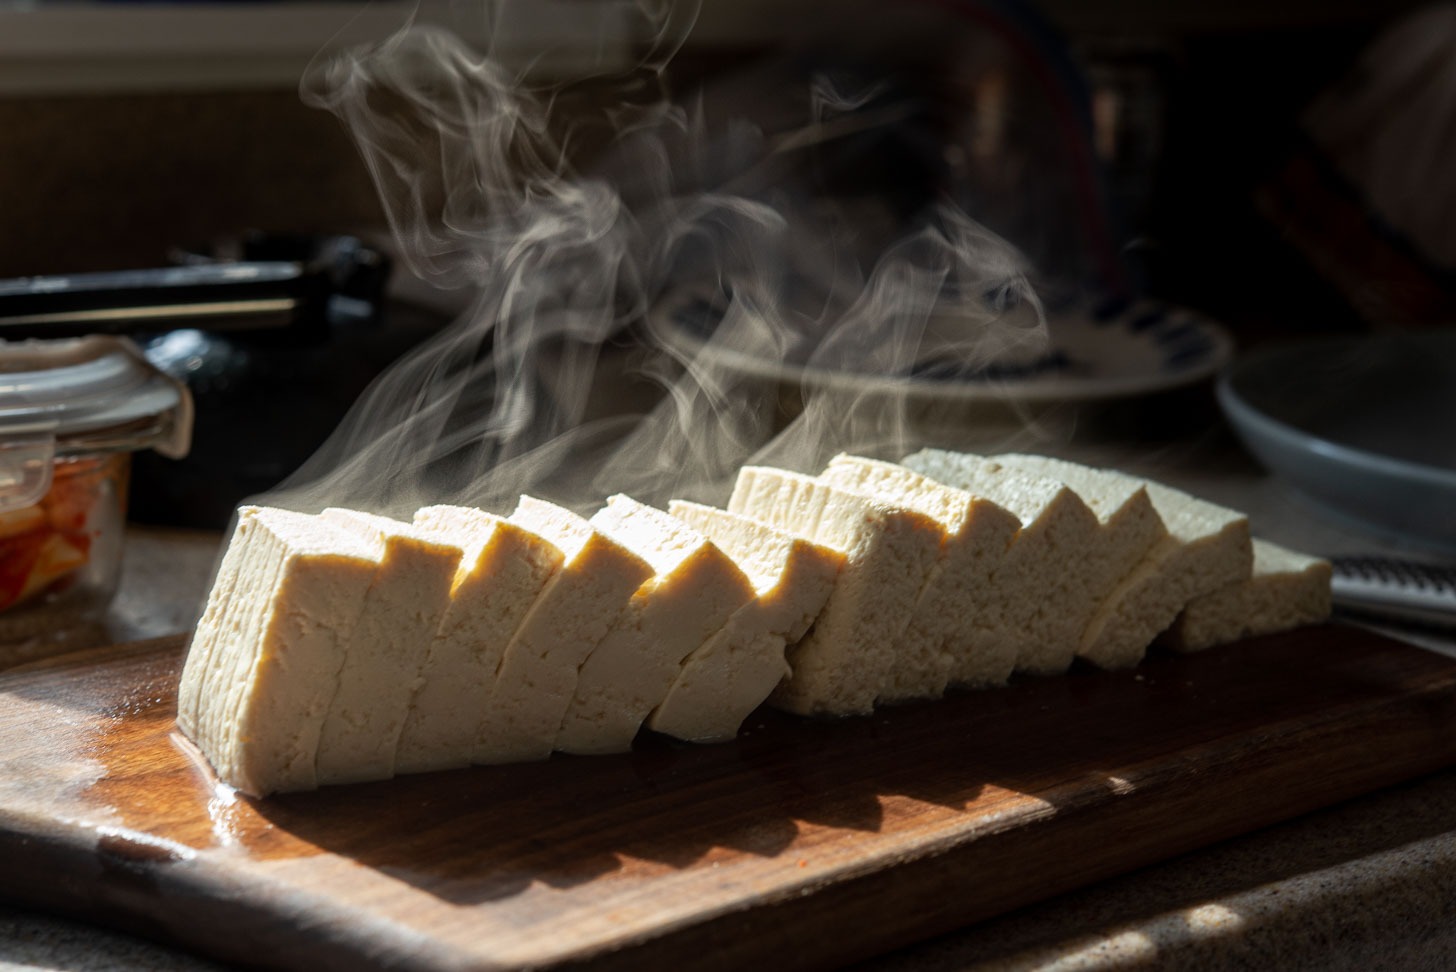 Boiled hot tofu is sliced on a cutting board.